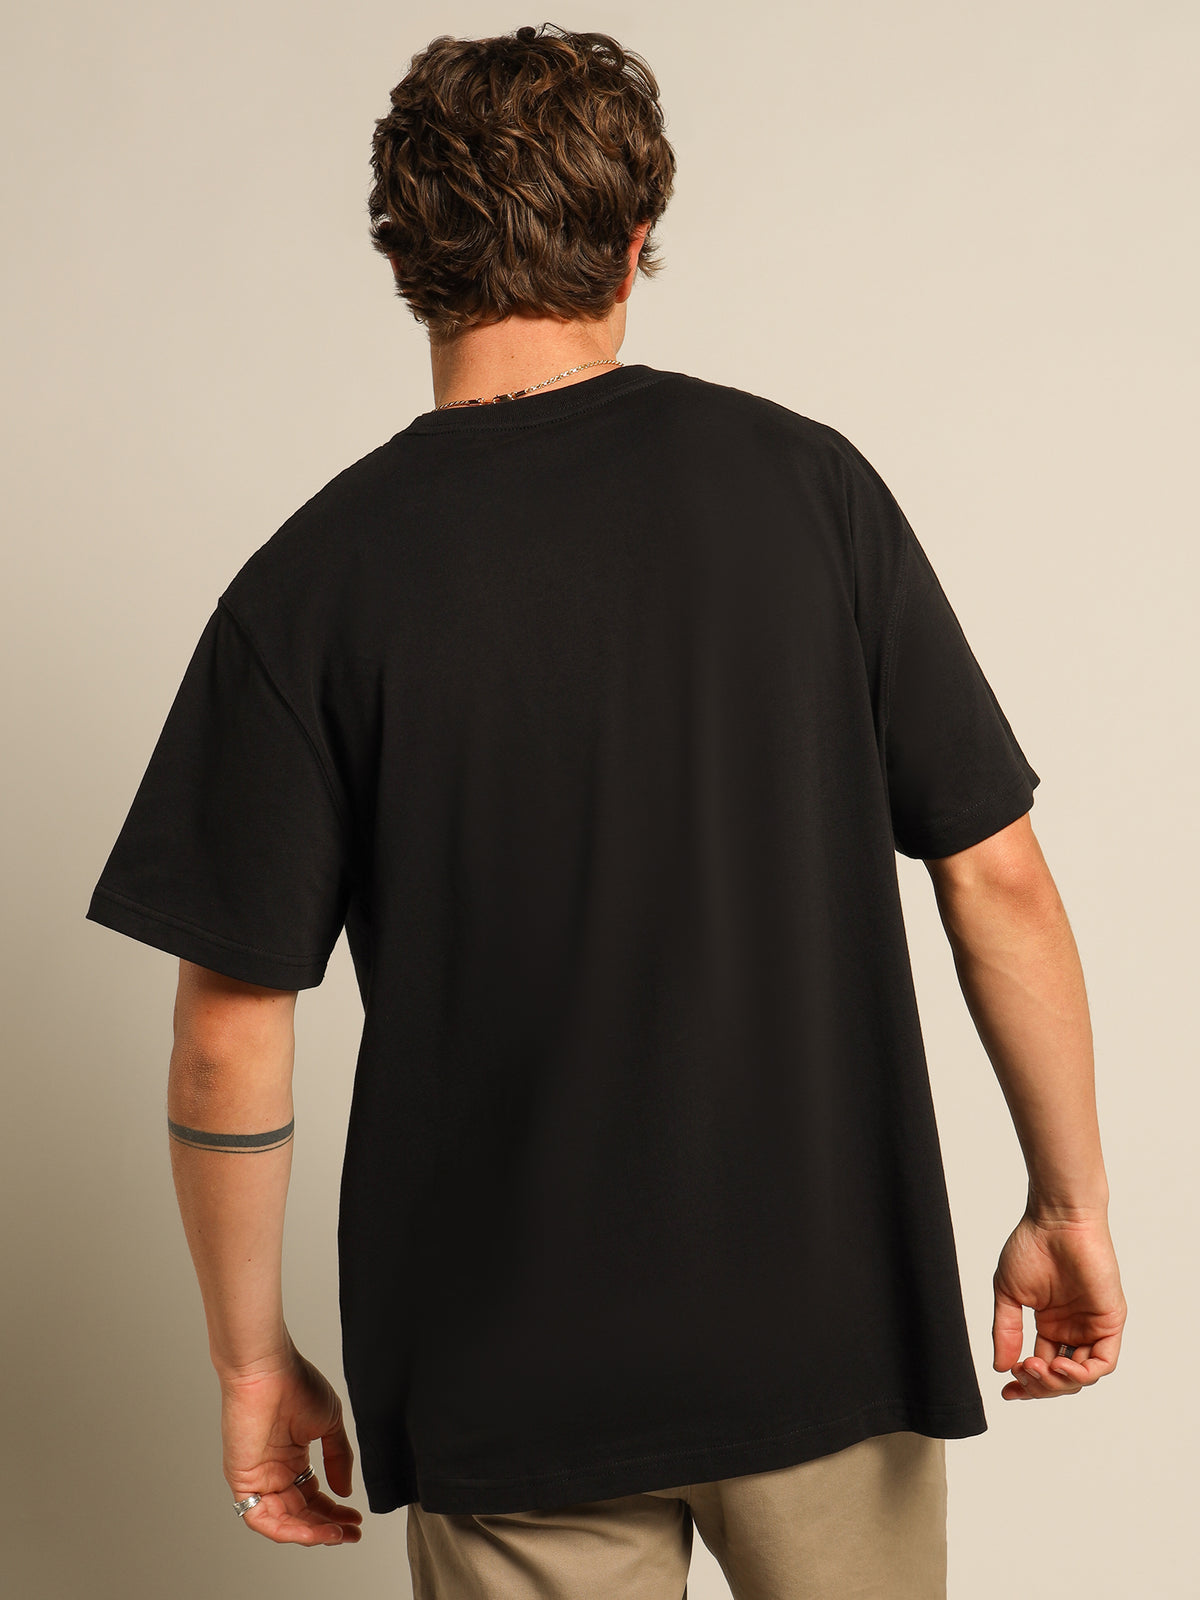 WS450 Heavyweight T-Shirt in Black